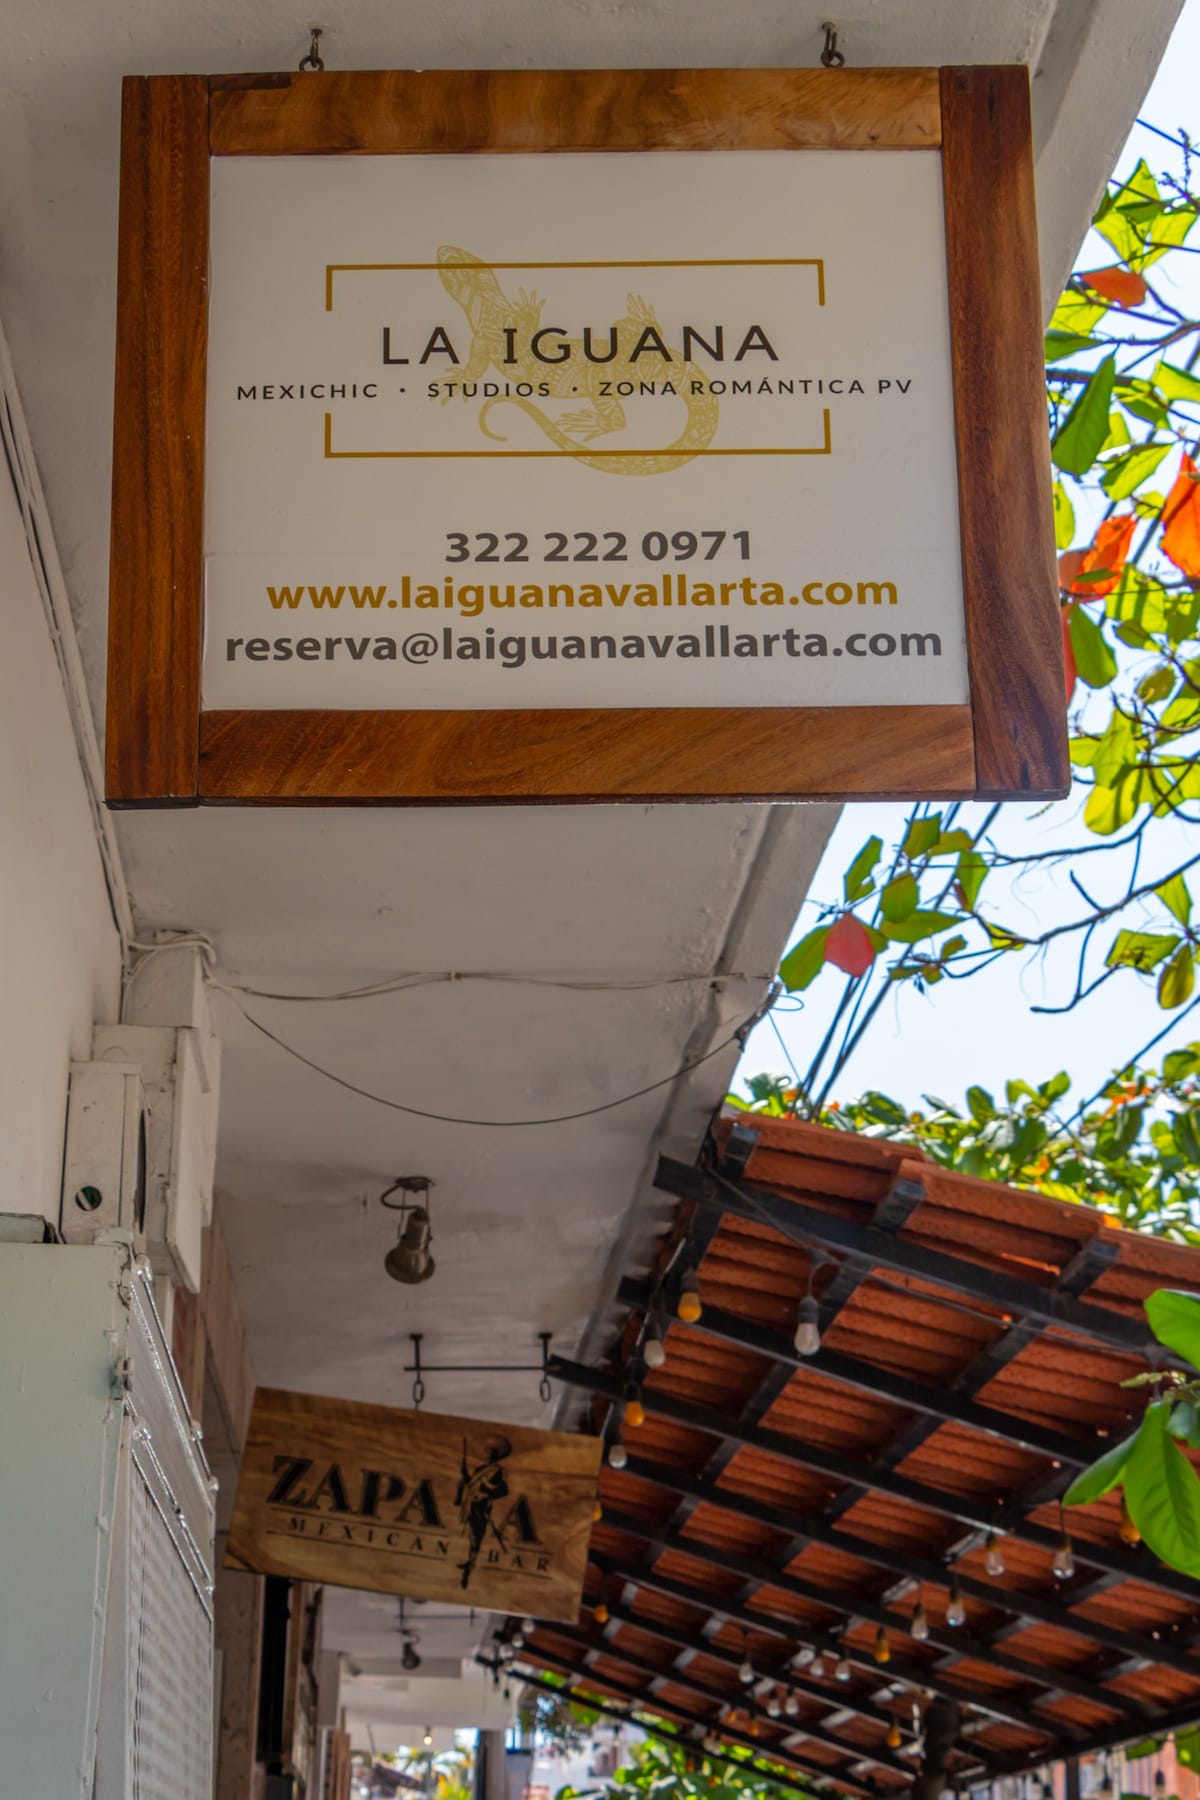 Party Studio @ La Iguana Puerto Vallarta LGBT